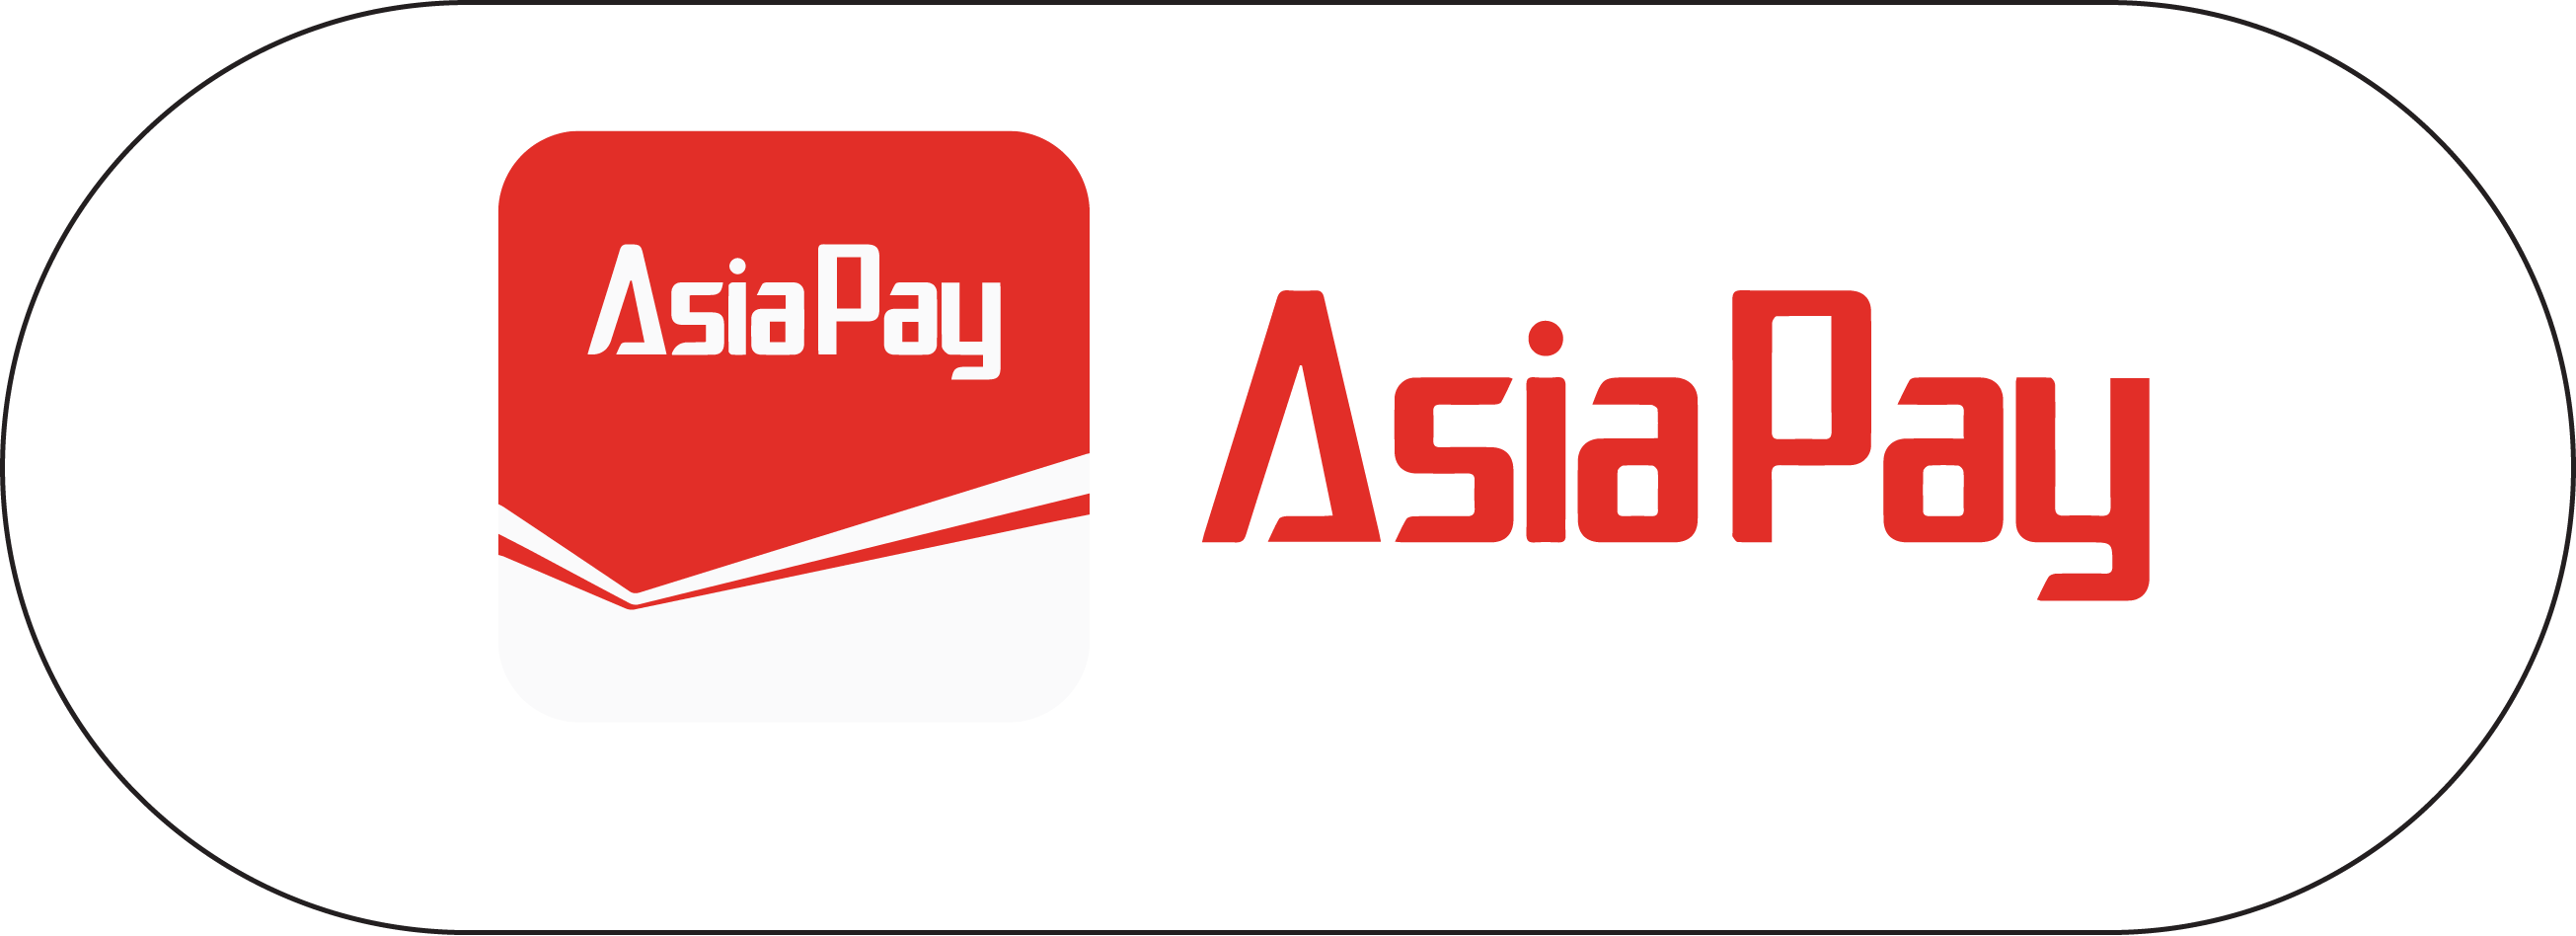 AsiaPay.png